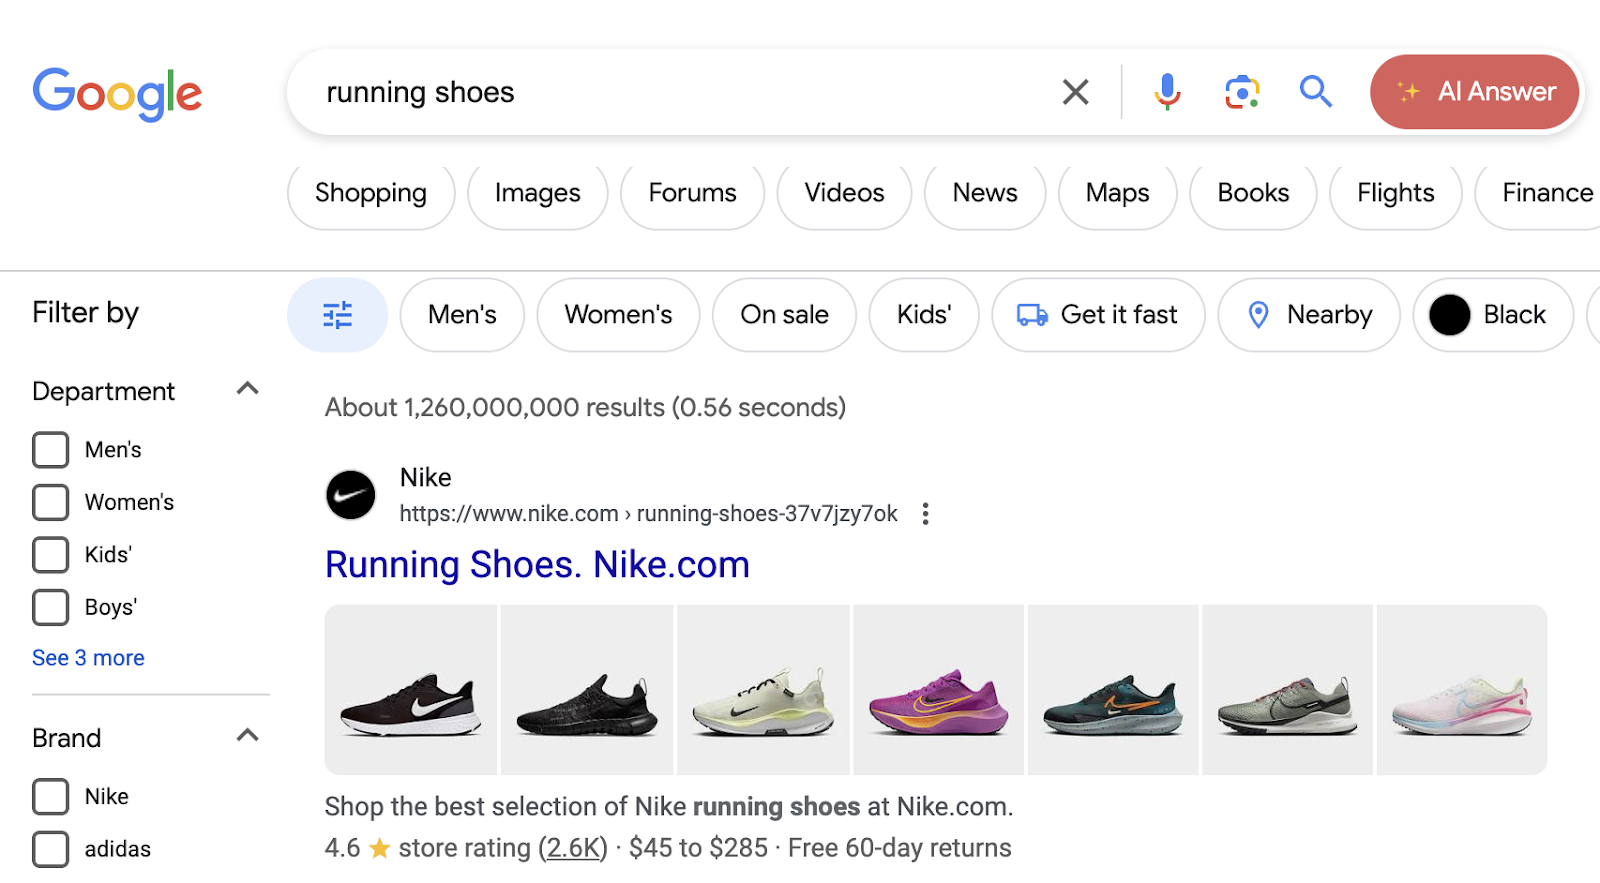 Google shopping ads keywords